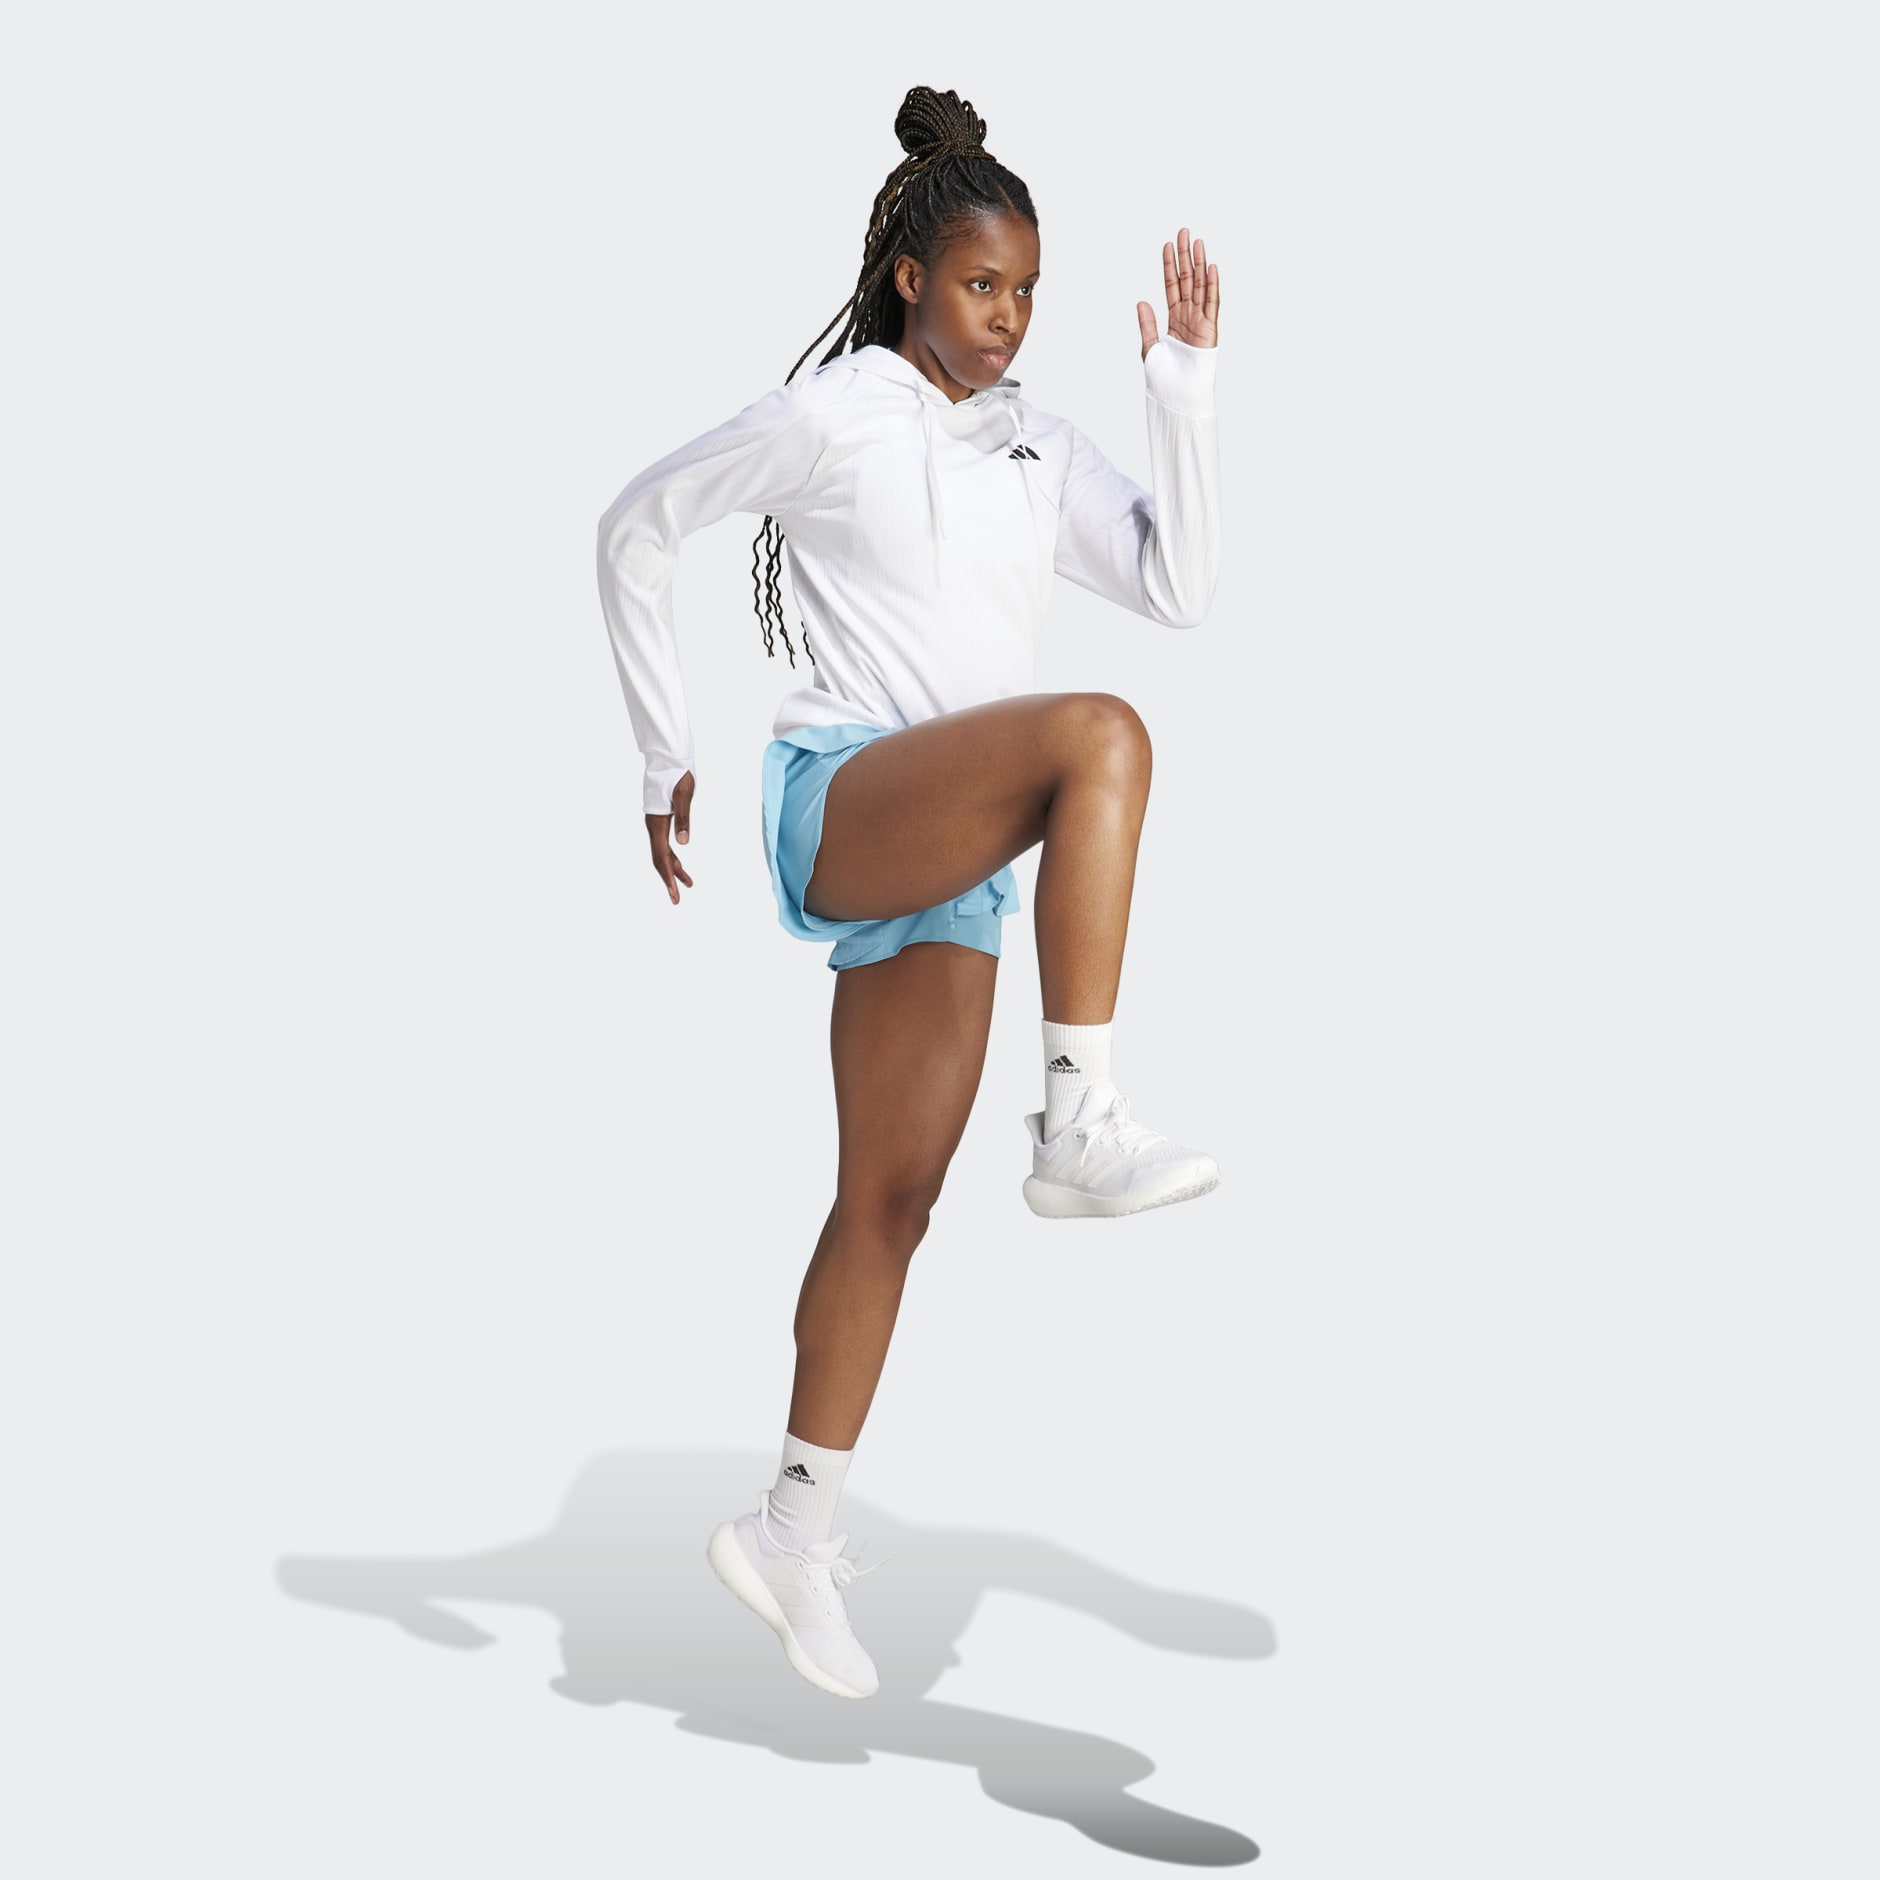 adidas Made to be Remade Running Shorts - Black, Men's Running